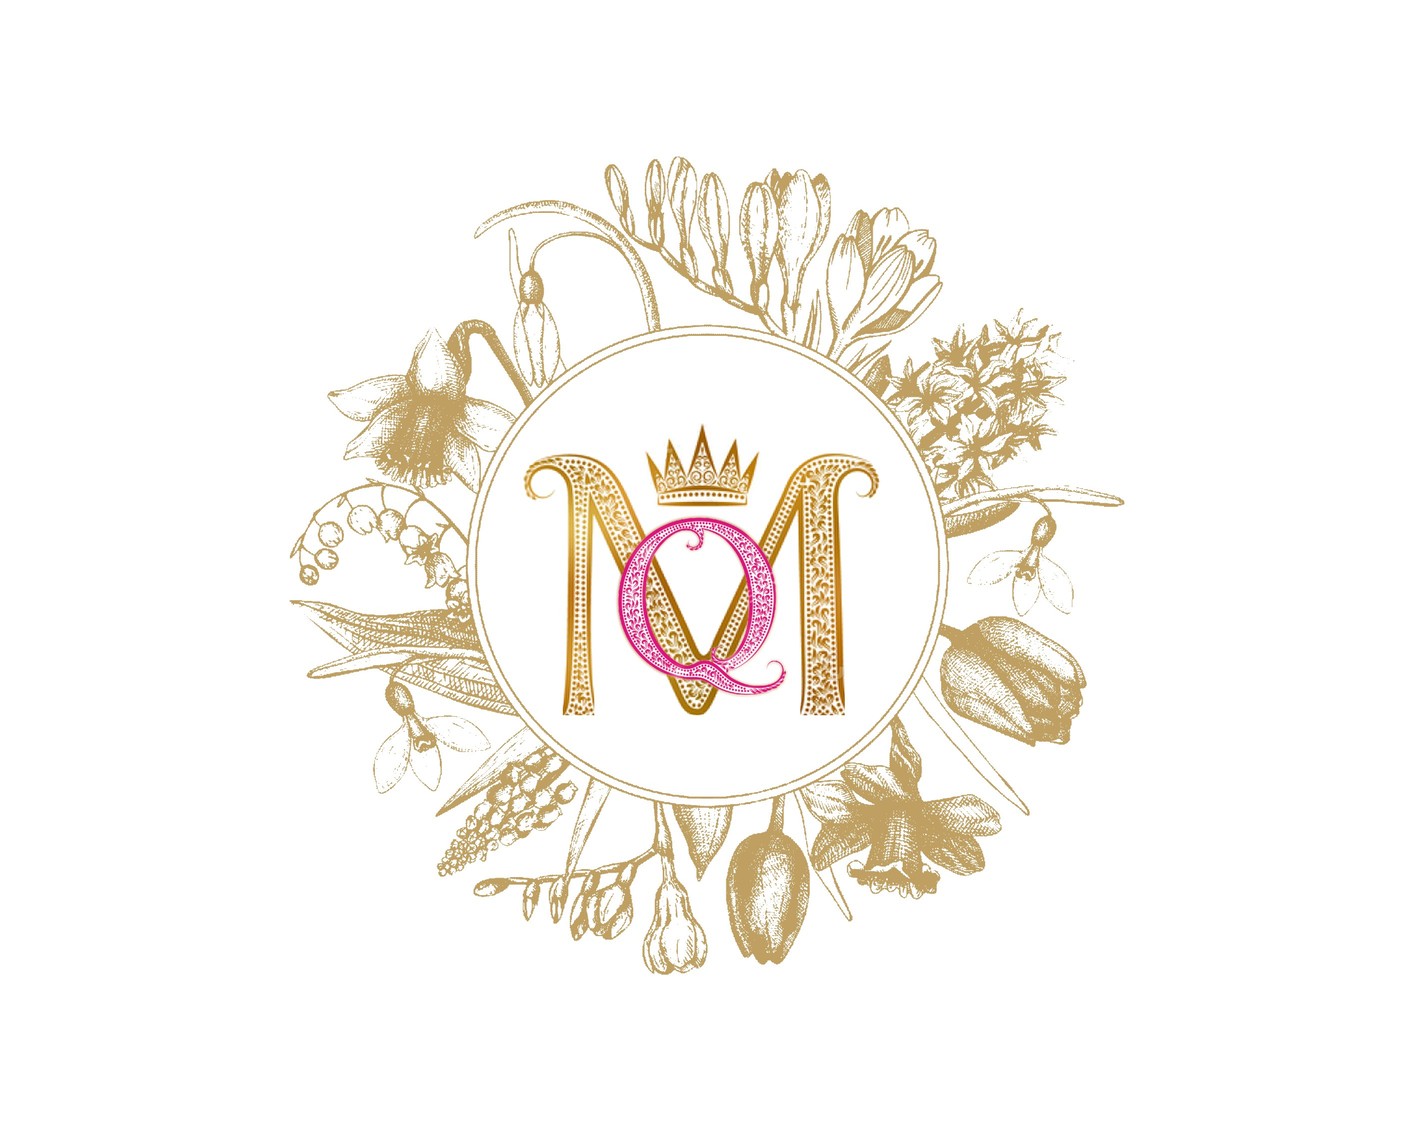 May Queen 2 Logo Design